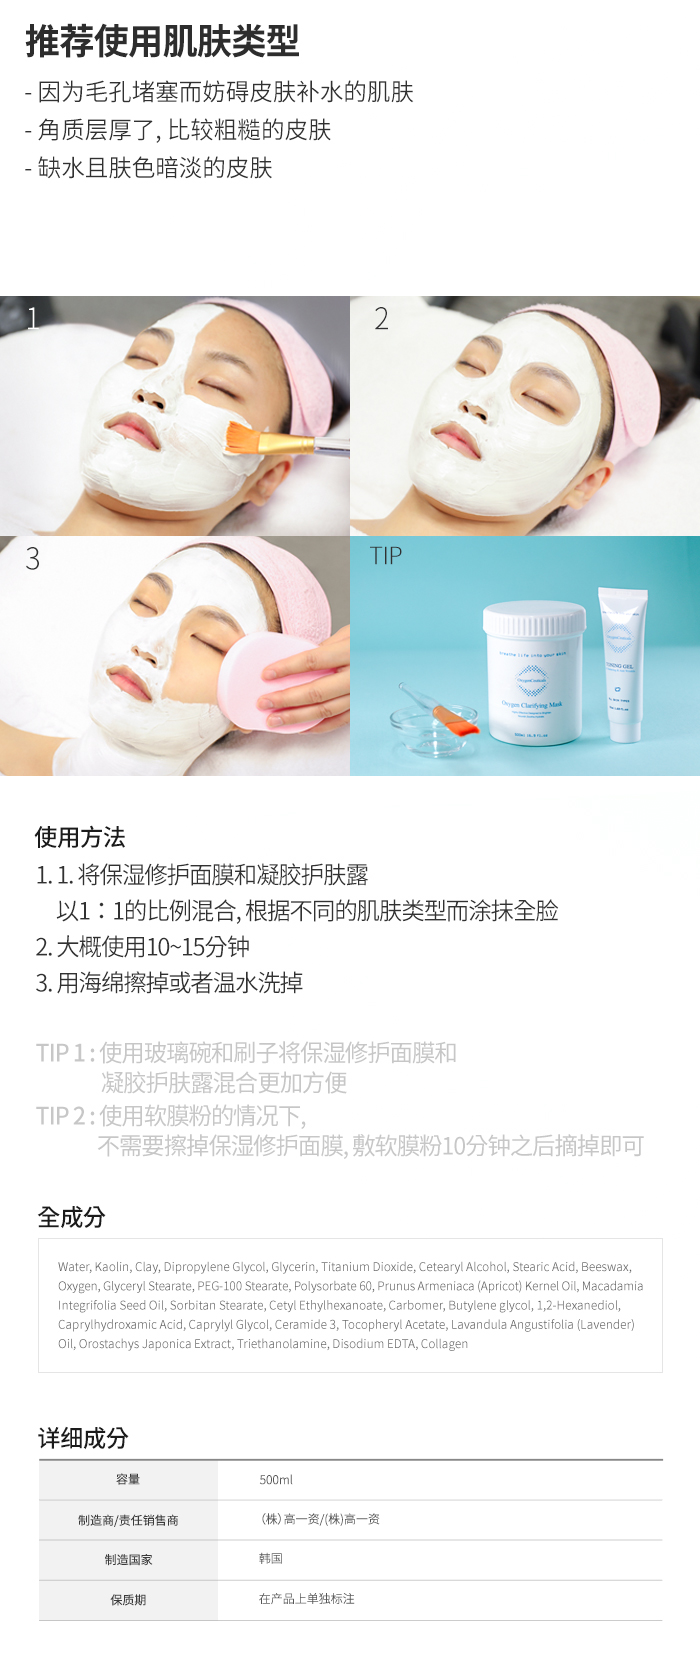 clarifying mask moisturizing and repairing mask: -5